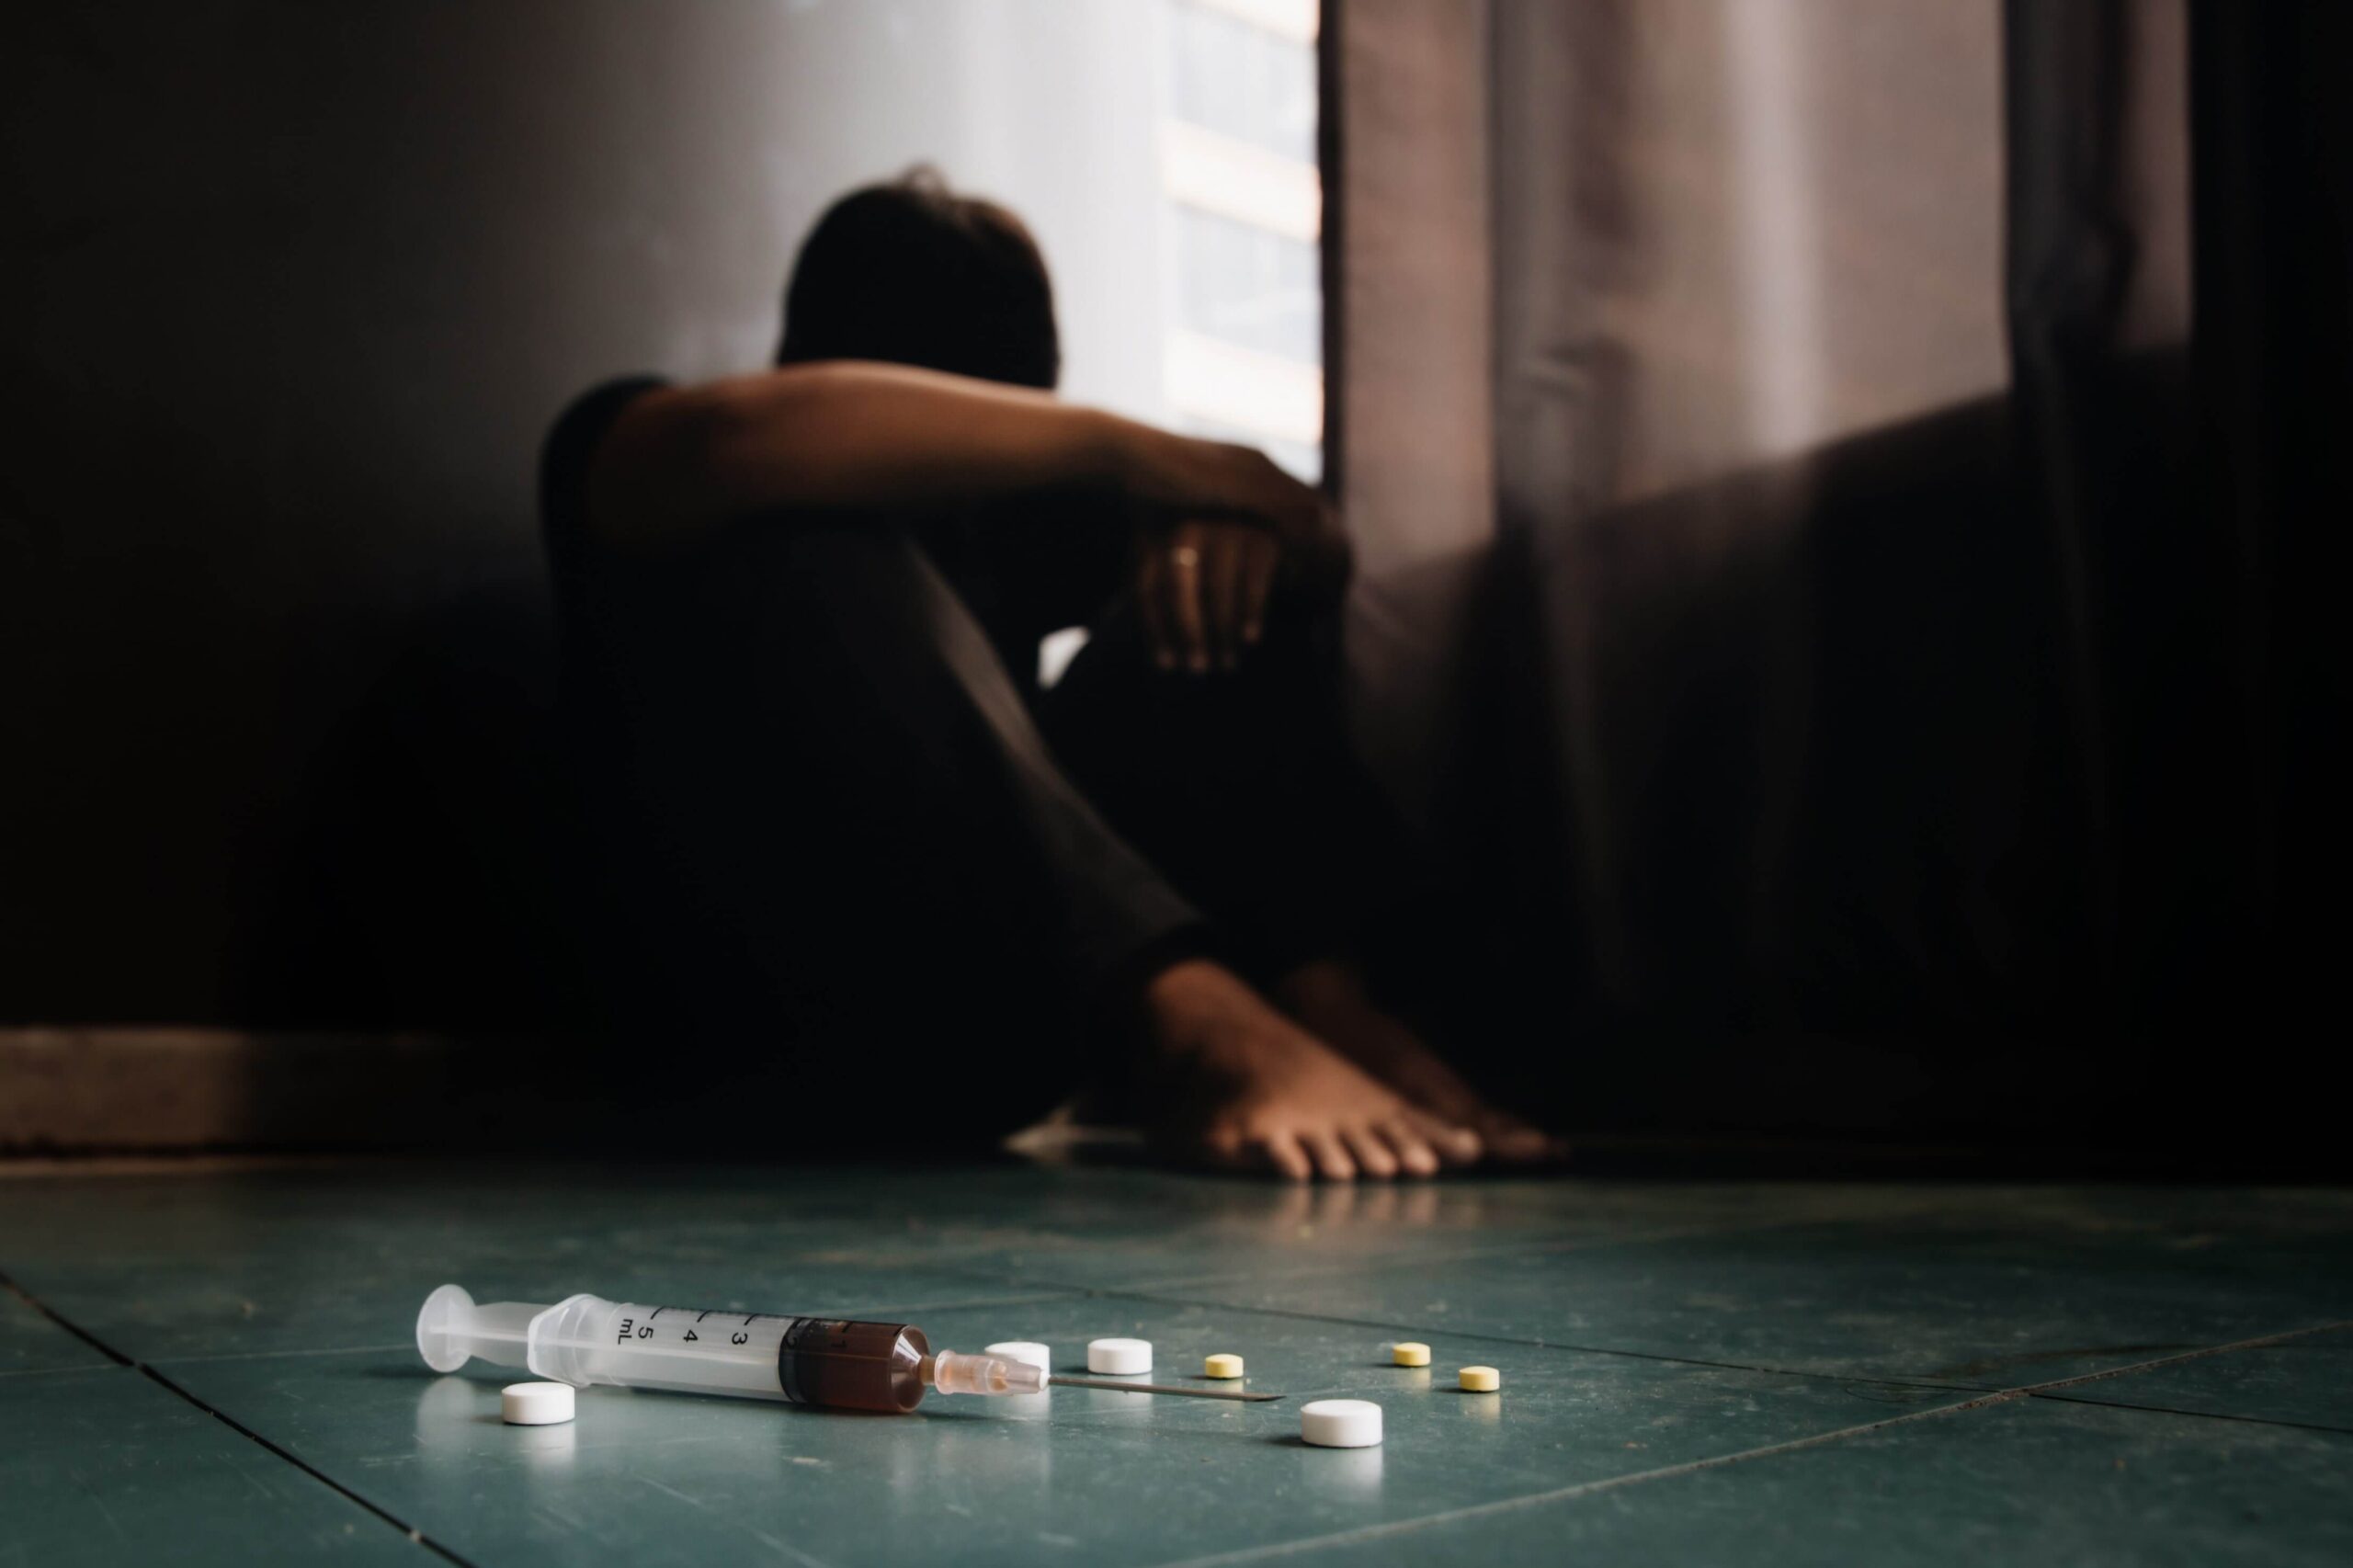 depressed addict sitting in front of drugs